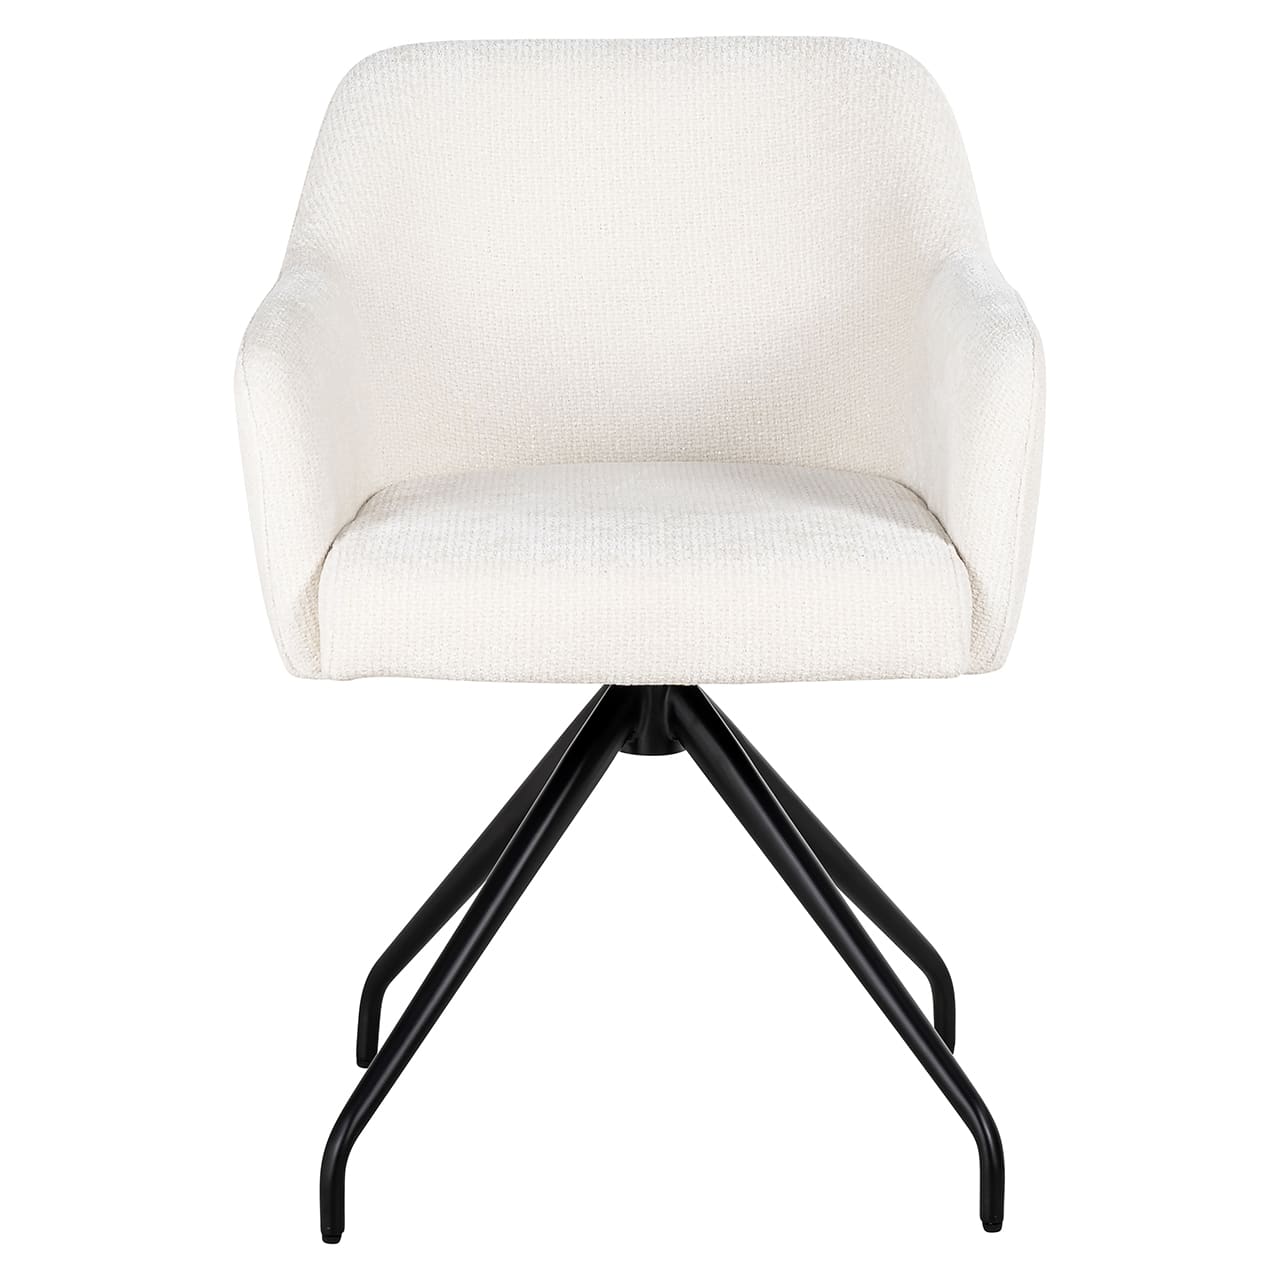 Chair Benthe white unicorn (Unicorn 02 white)